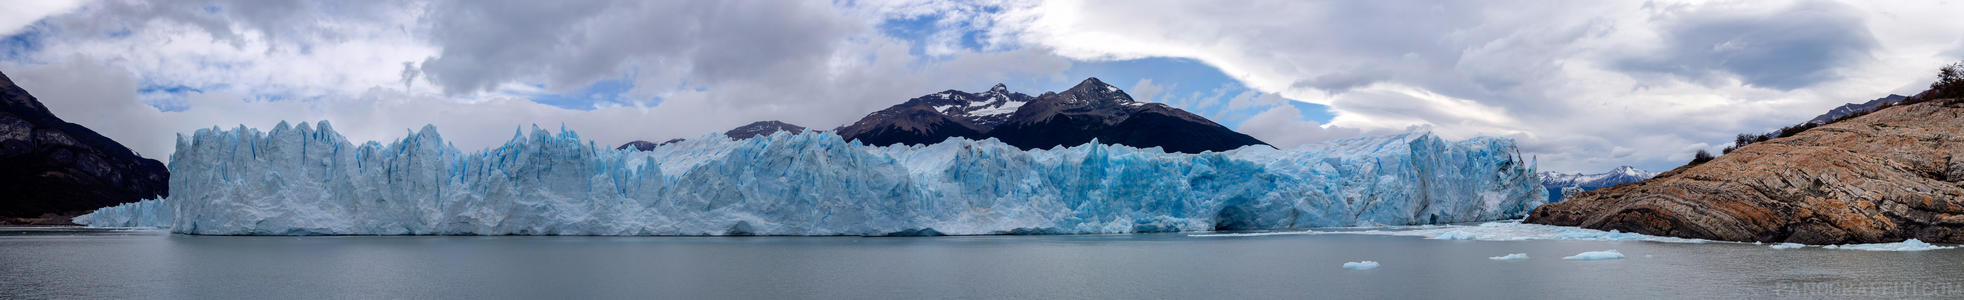 Perito Moreno Glacier at Water Level - Less than half of the Perito Moreno Glacier can be seen from this perspective in the lake